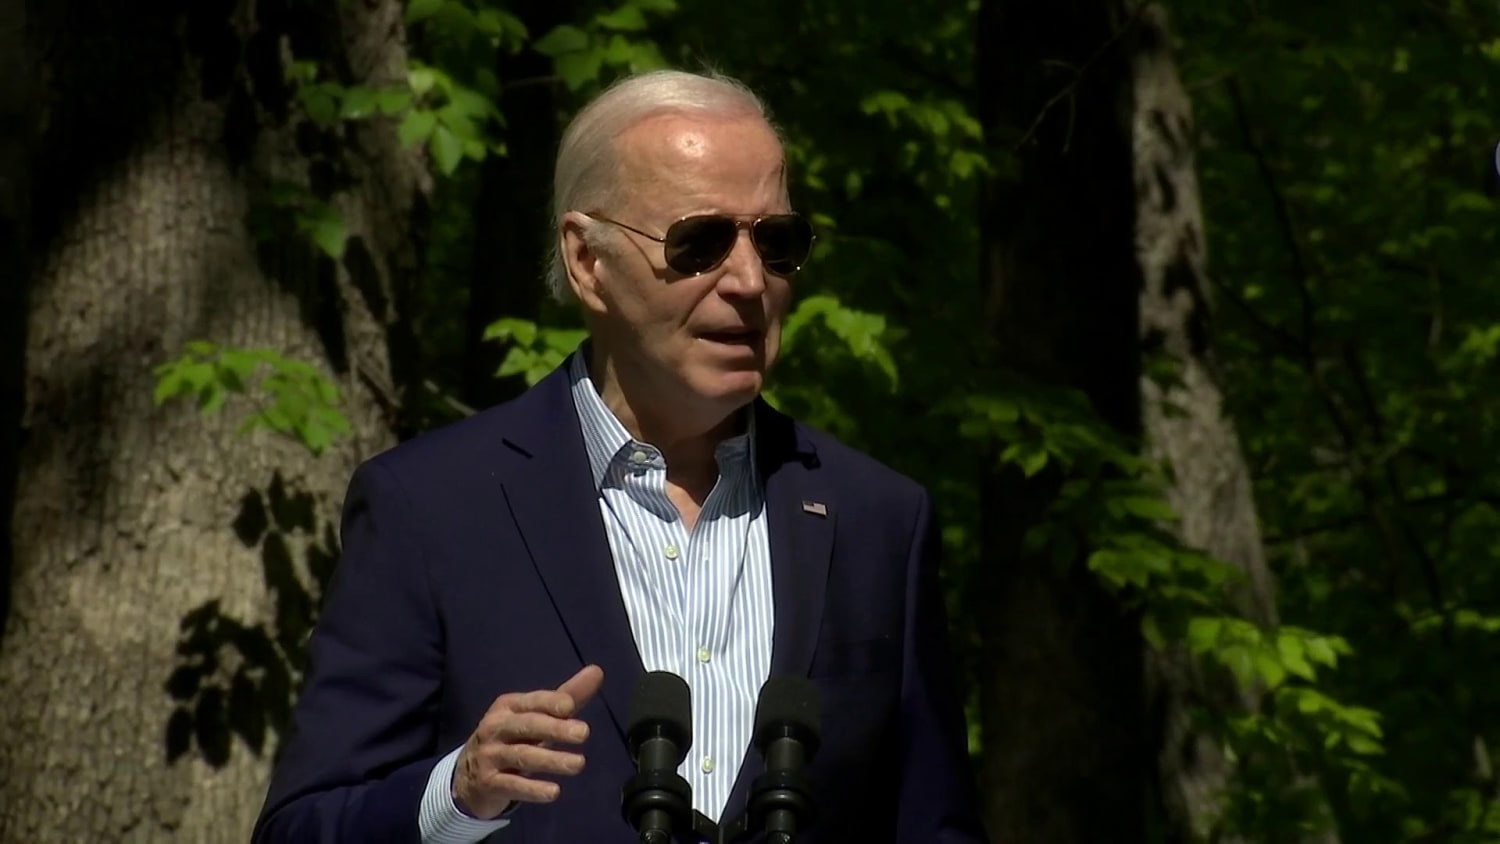 Biden announces 'solar for all' grants on Earth Day